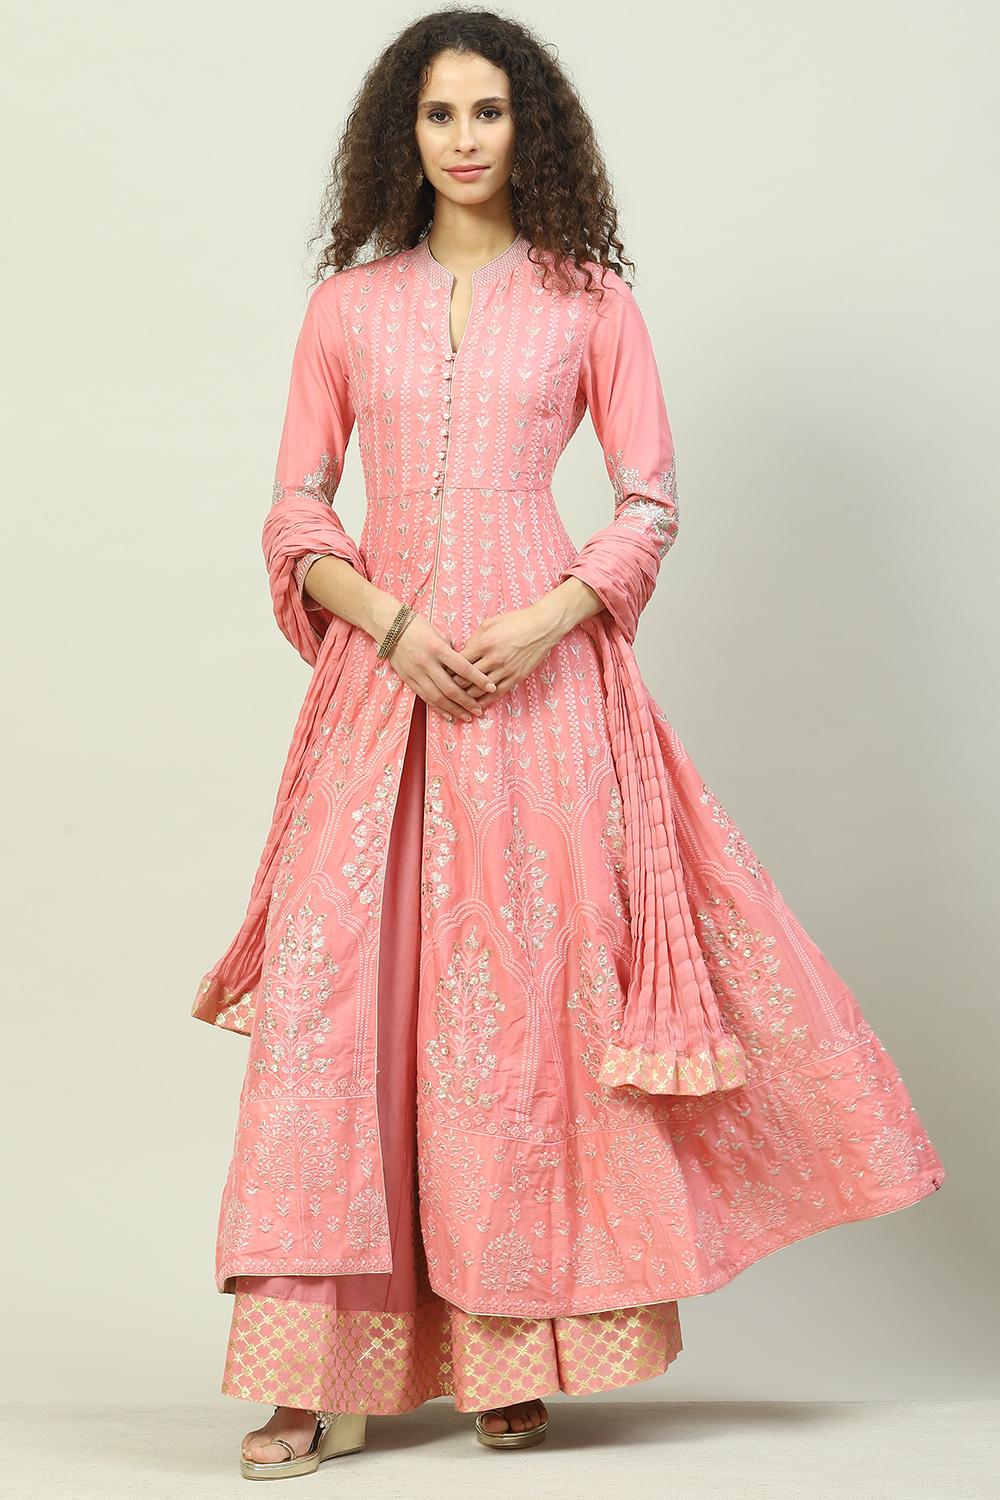 Buy online Blush Pink Cotton Anarkali Suit Set for women at best ...